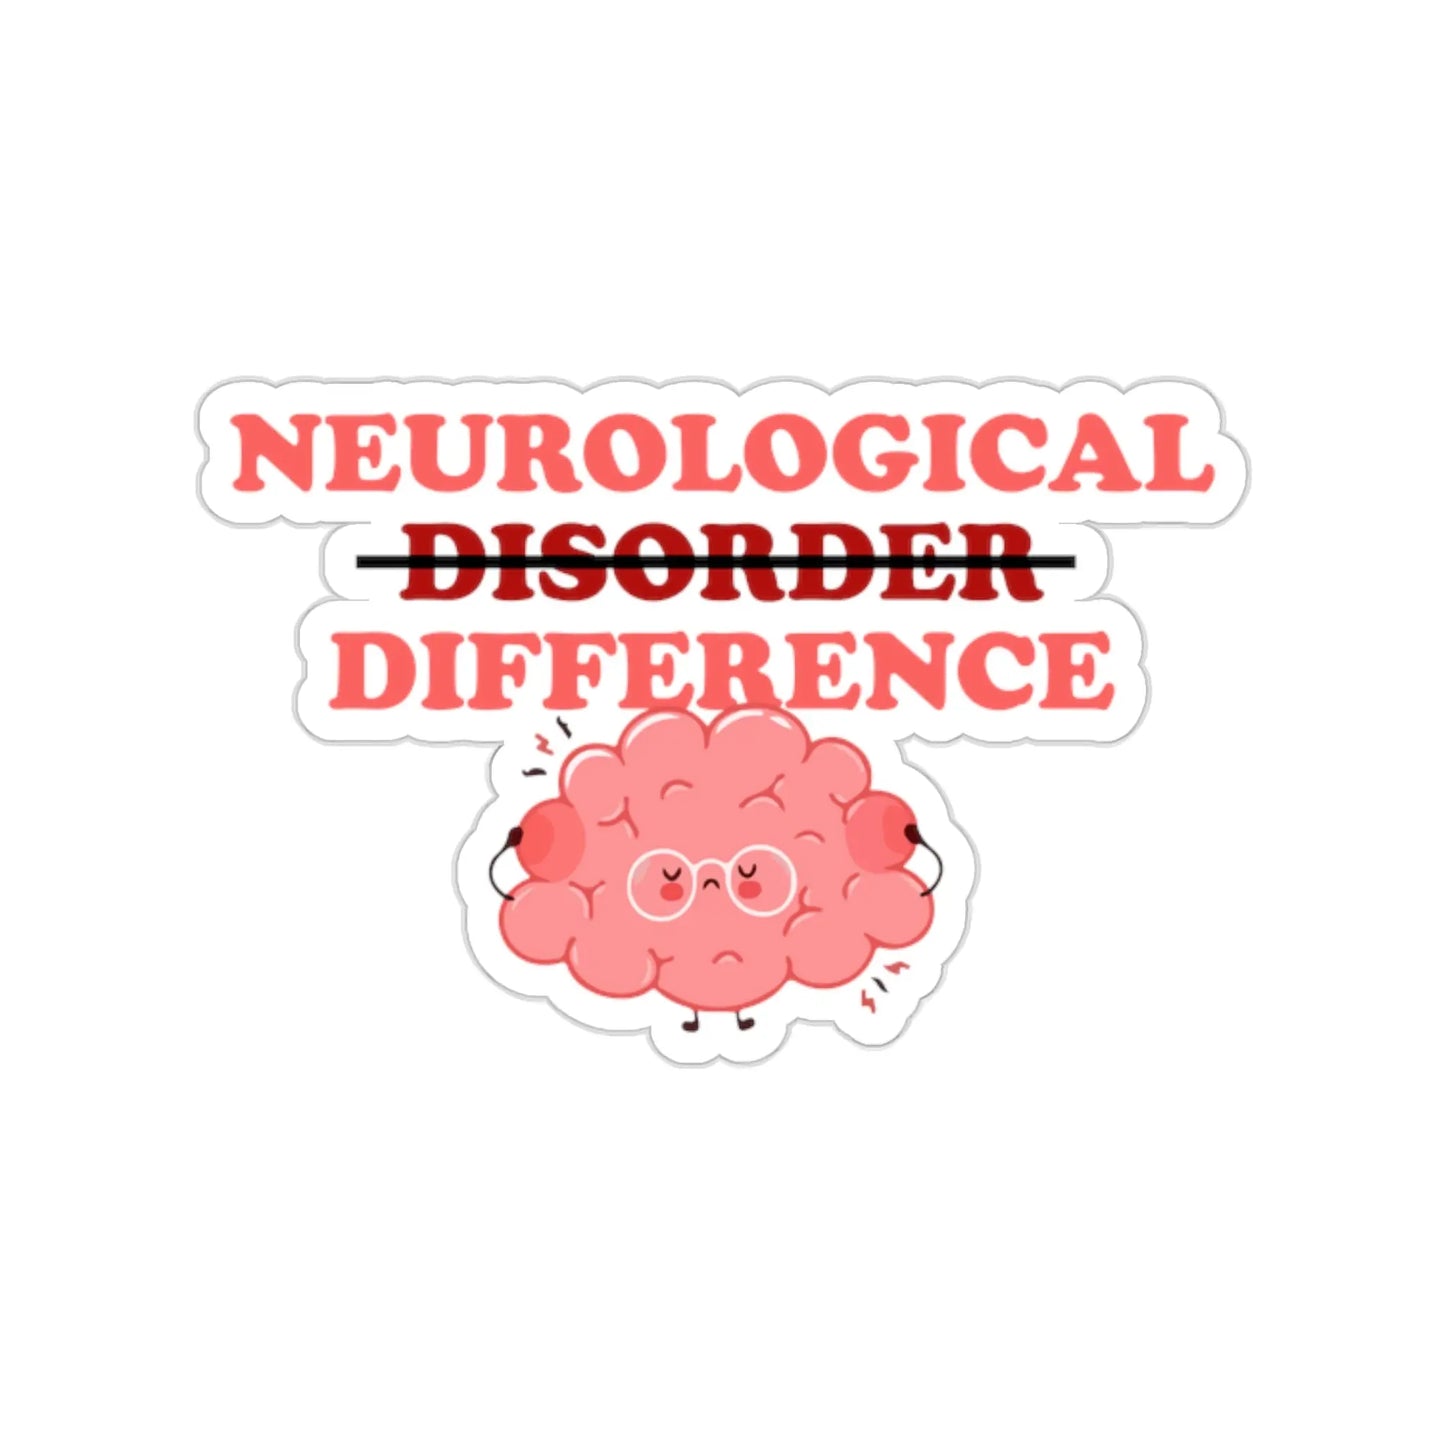 Neurologic Difference (Not Disorder) Sticker